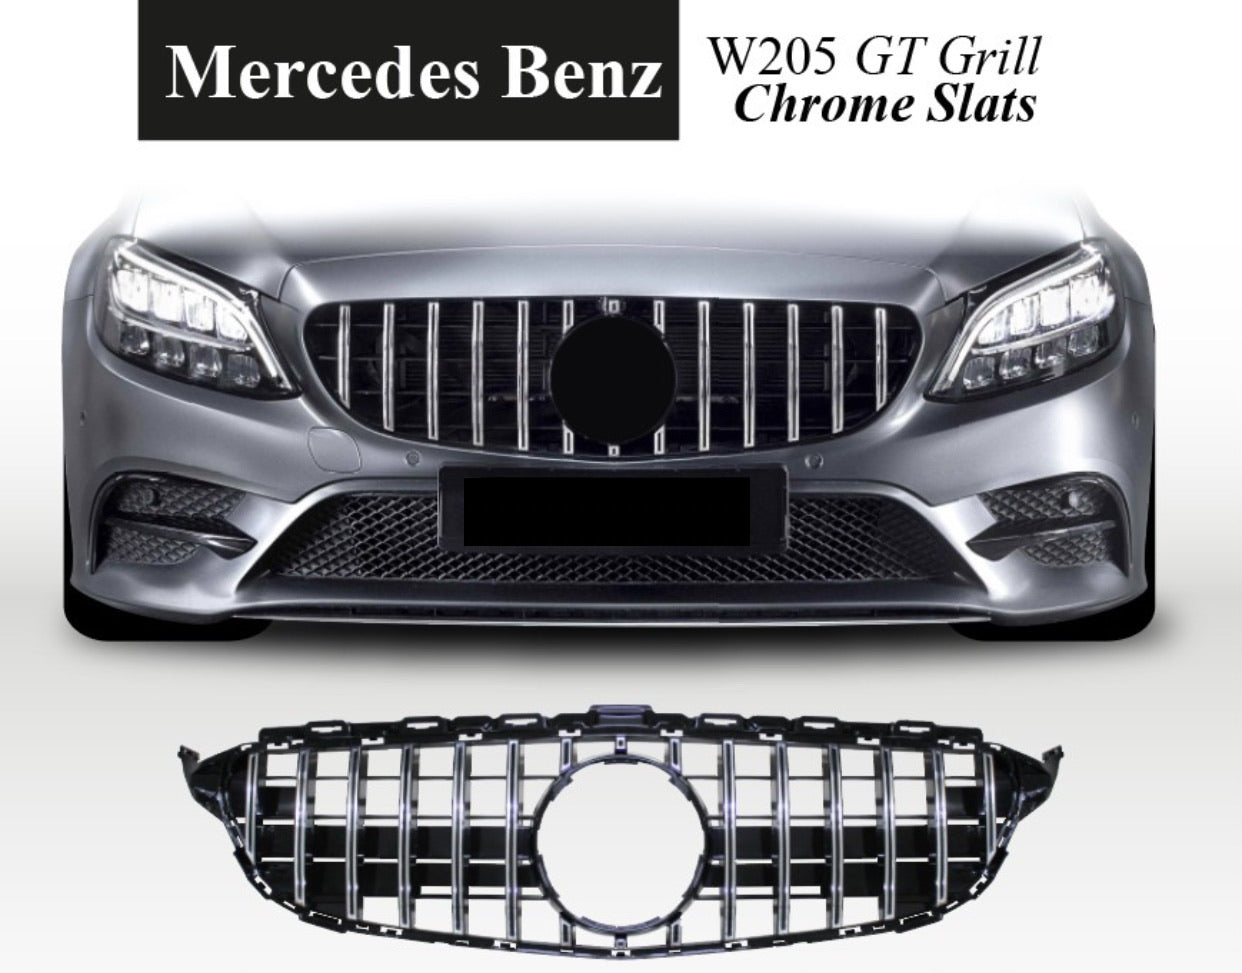 MERCEDES W205 GT CHROME GRILL